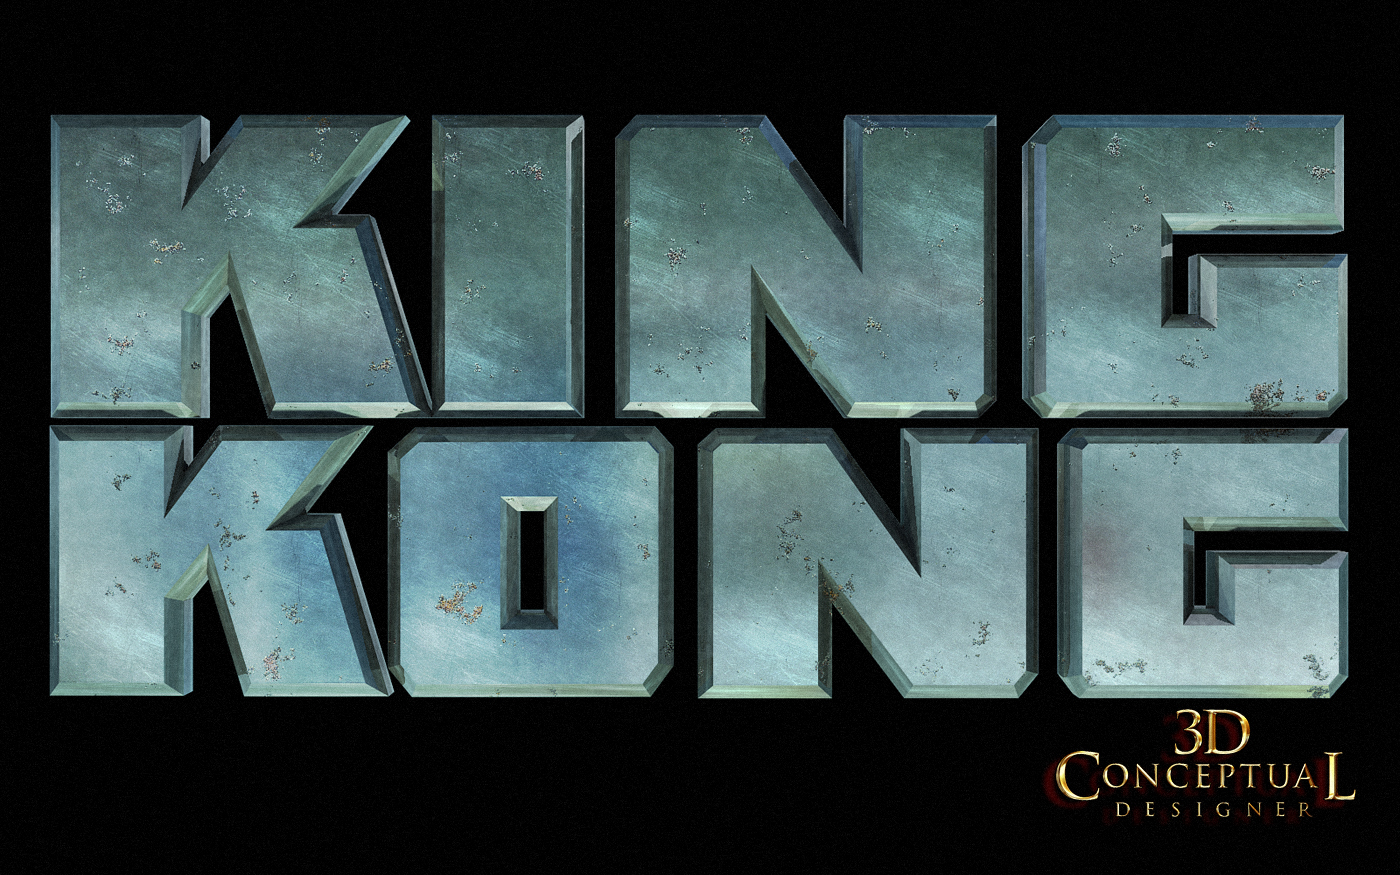 3DconceptualdesignerBlog: Project Review KING KONG[2005] 3D Logo Designs PART II